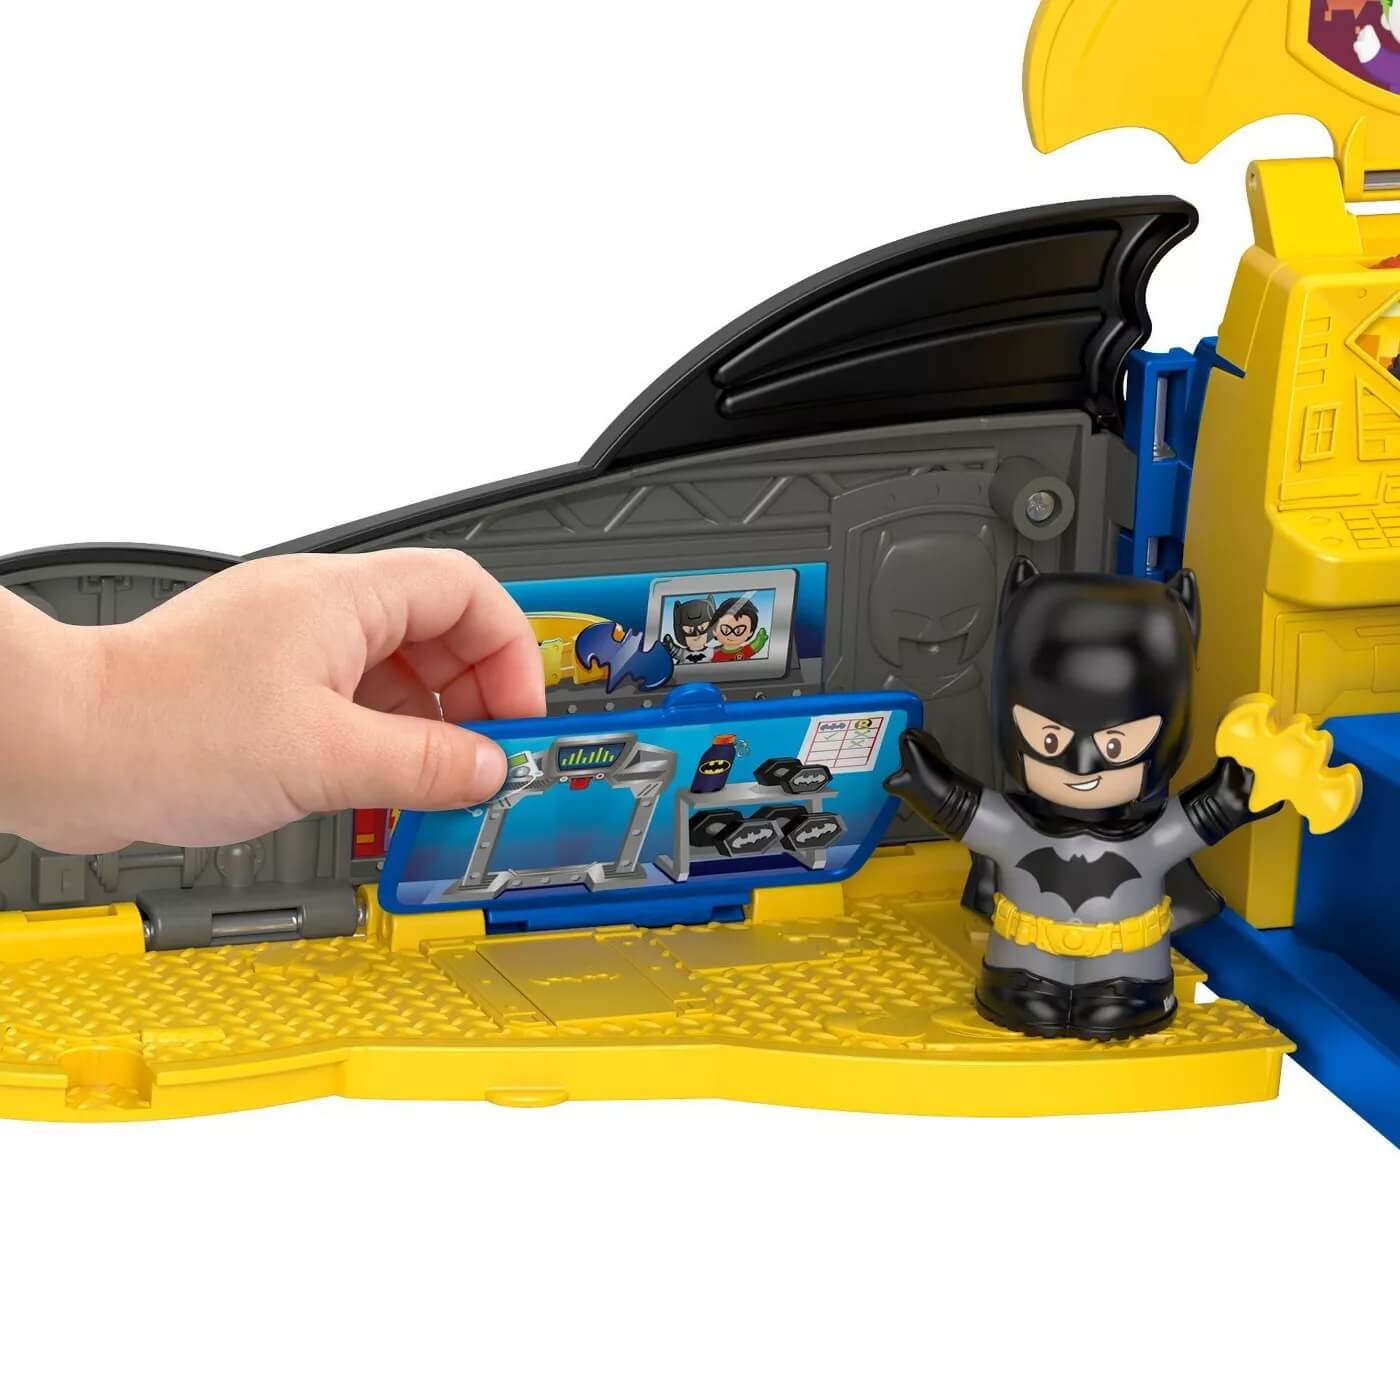 Little People DC Super Friends 2-in-1 Batmobile